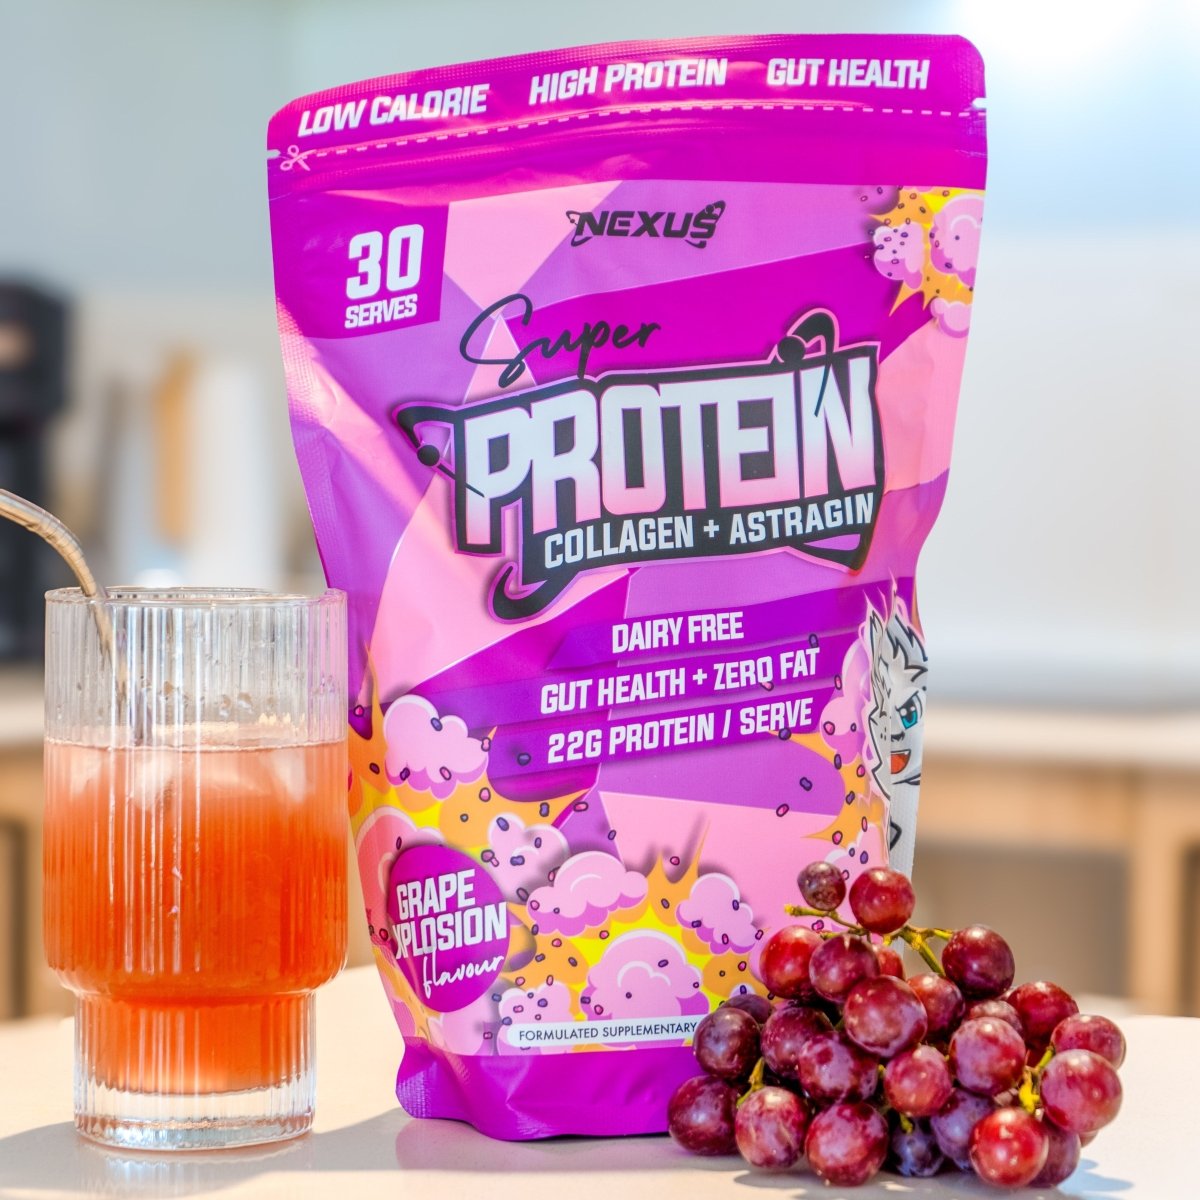 Super Protein Water: Grape Xplosion (30 Serves) - Nexus Sports Nutrition